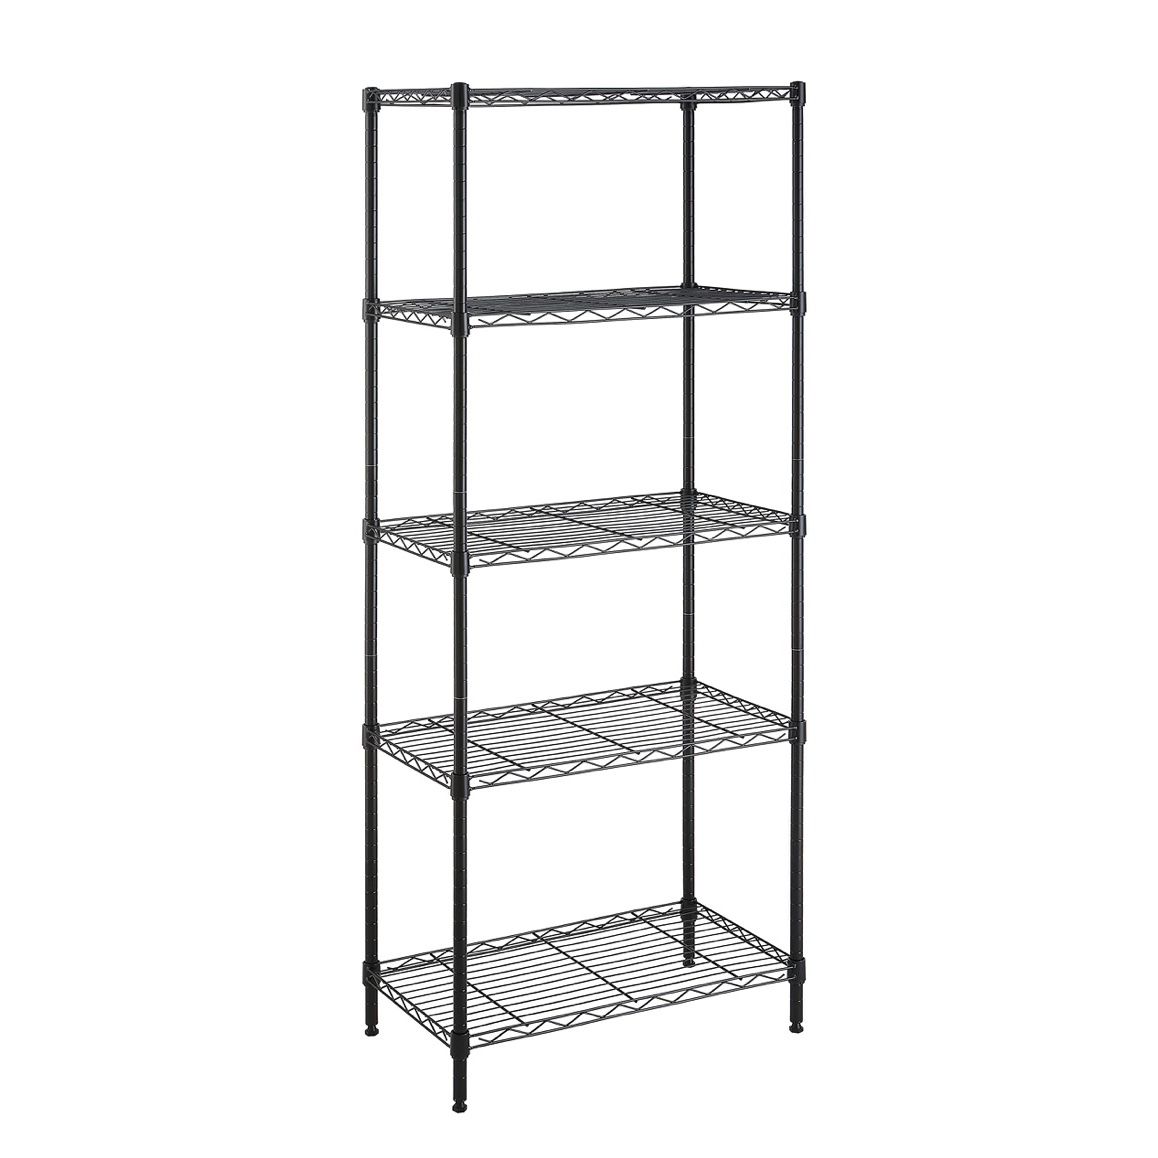 *Brand new* Amazon Basics 5-shelf Adjustable Storage Steel Shelf